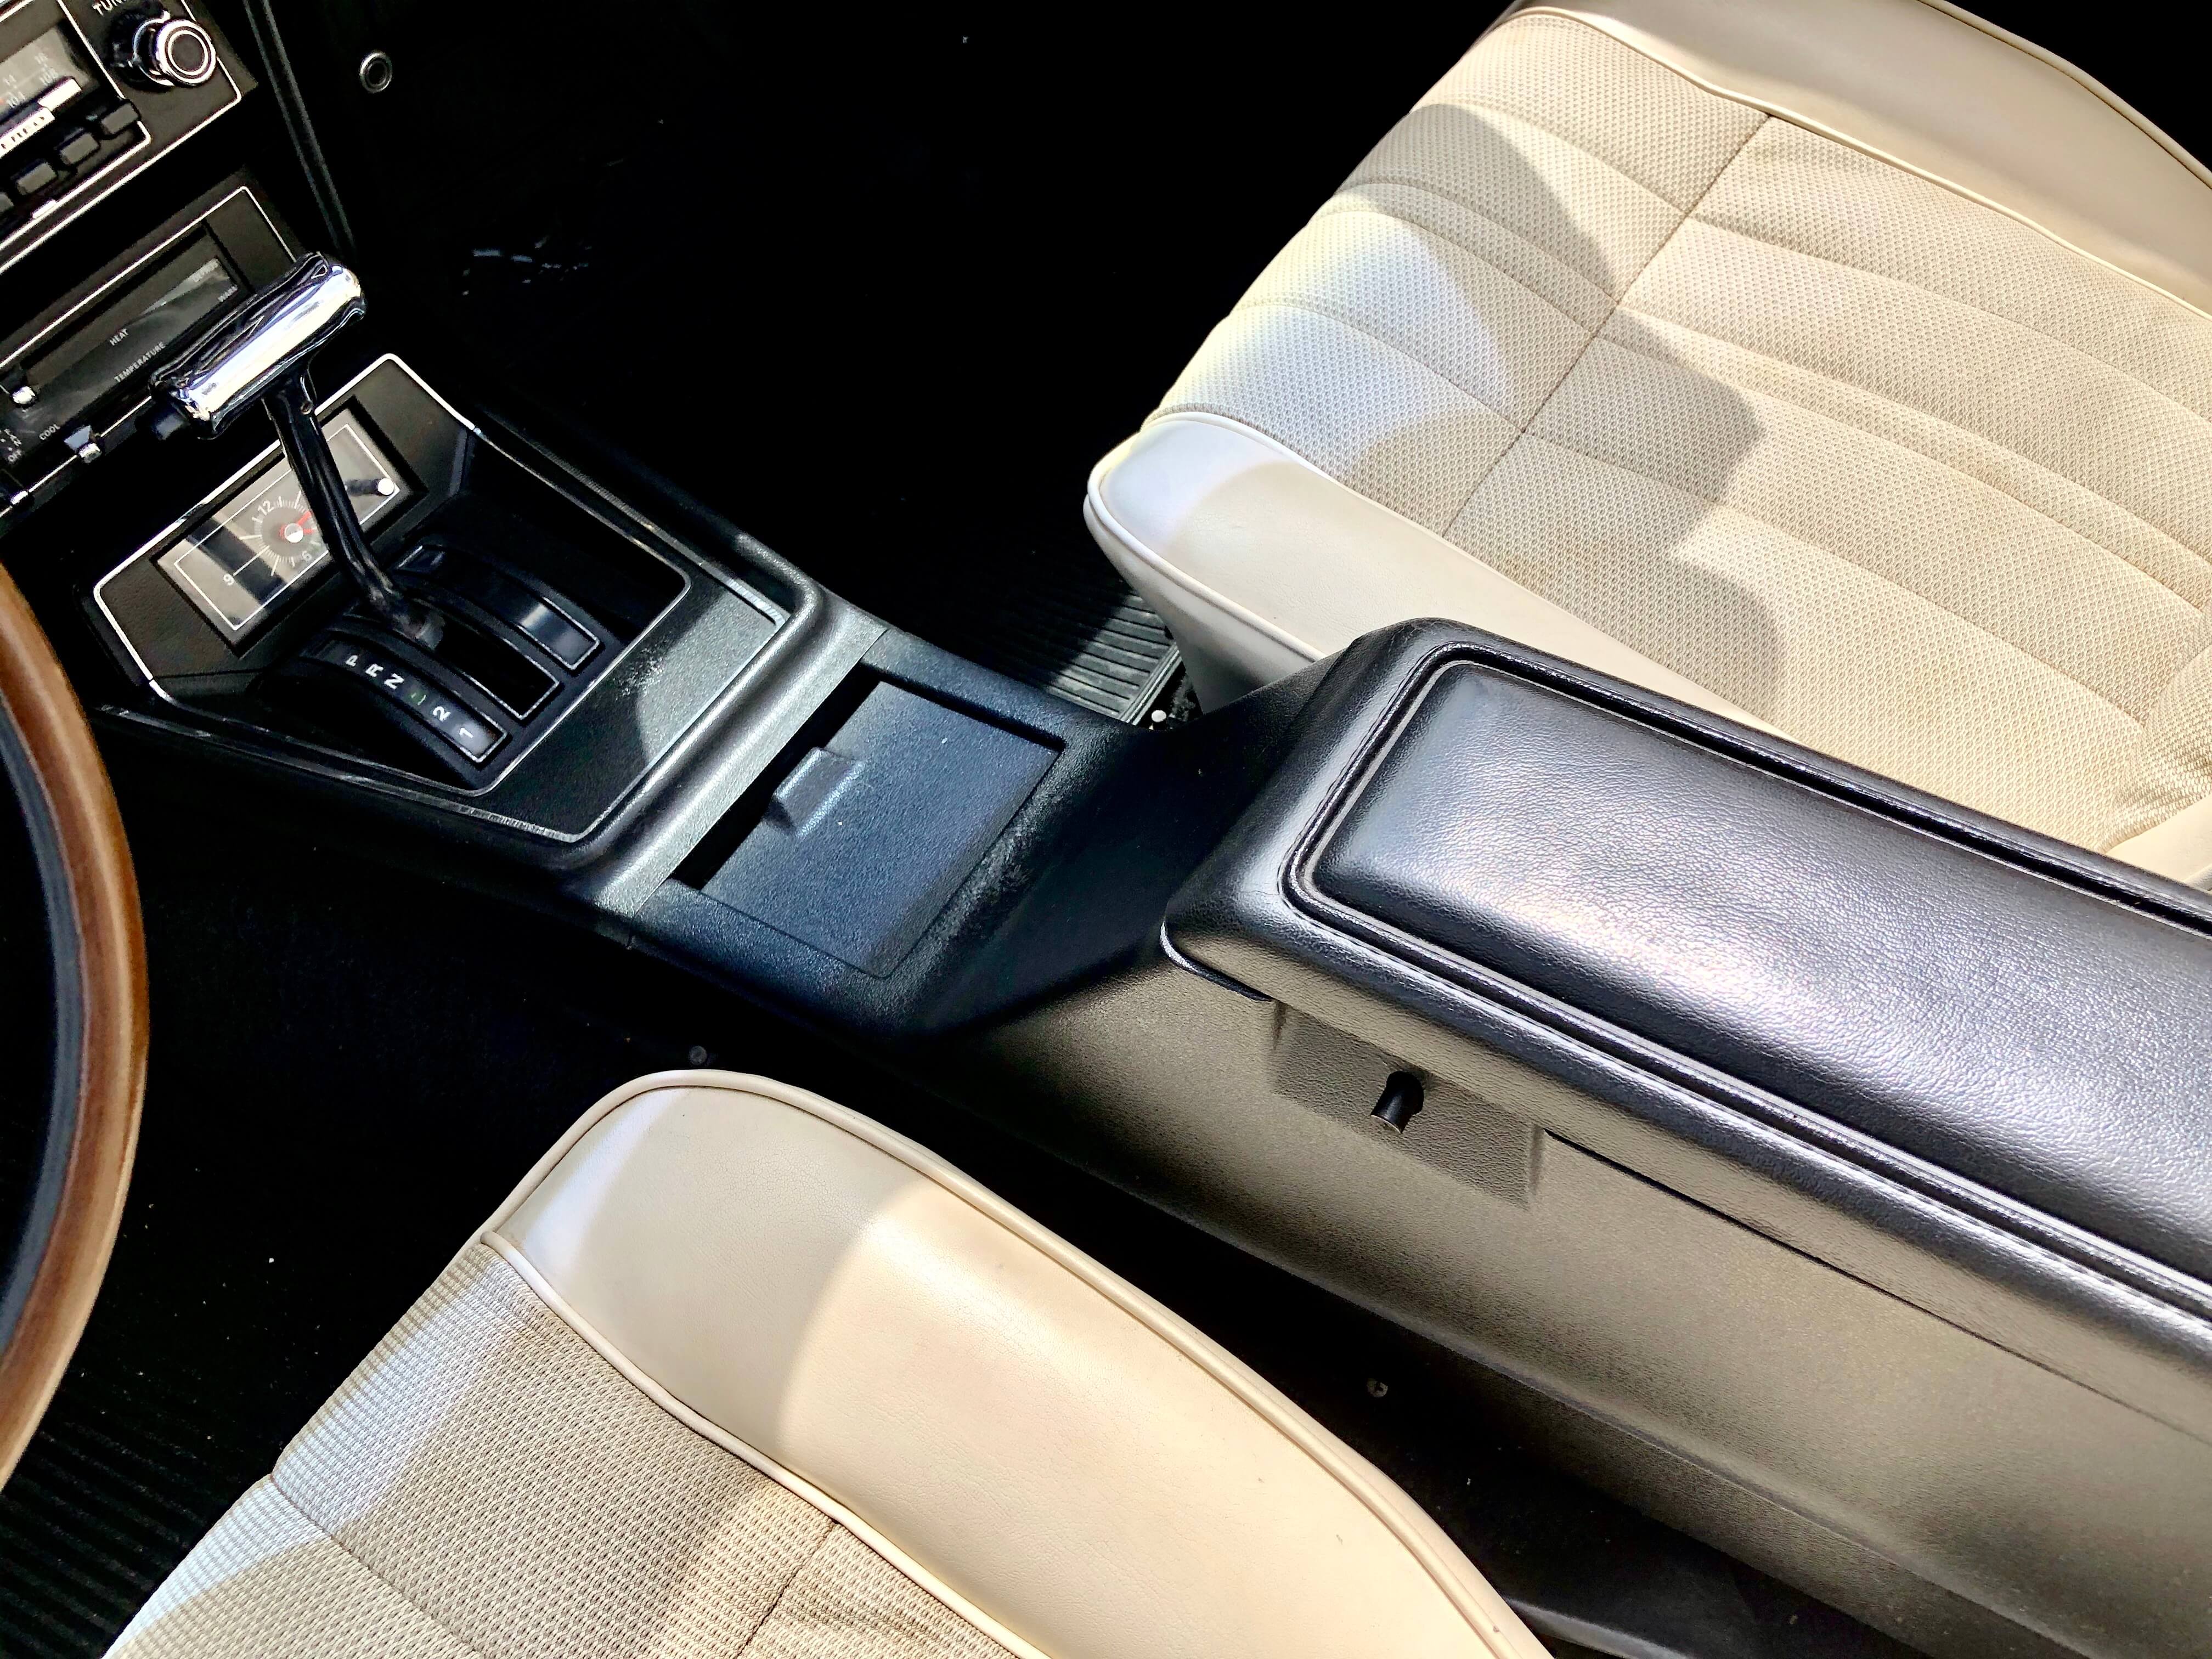 1973 Ford Mustang Convertible interior